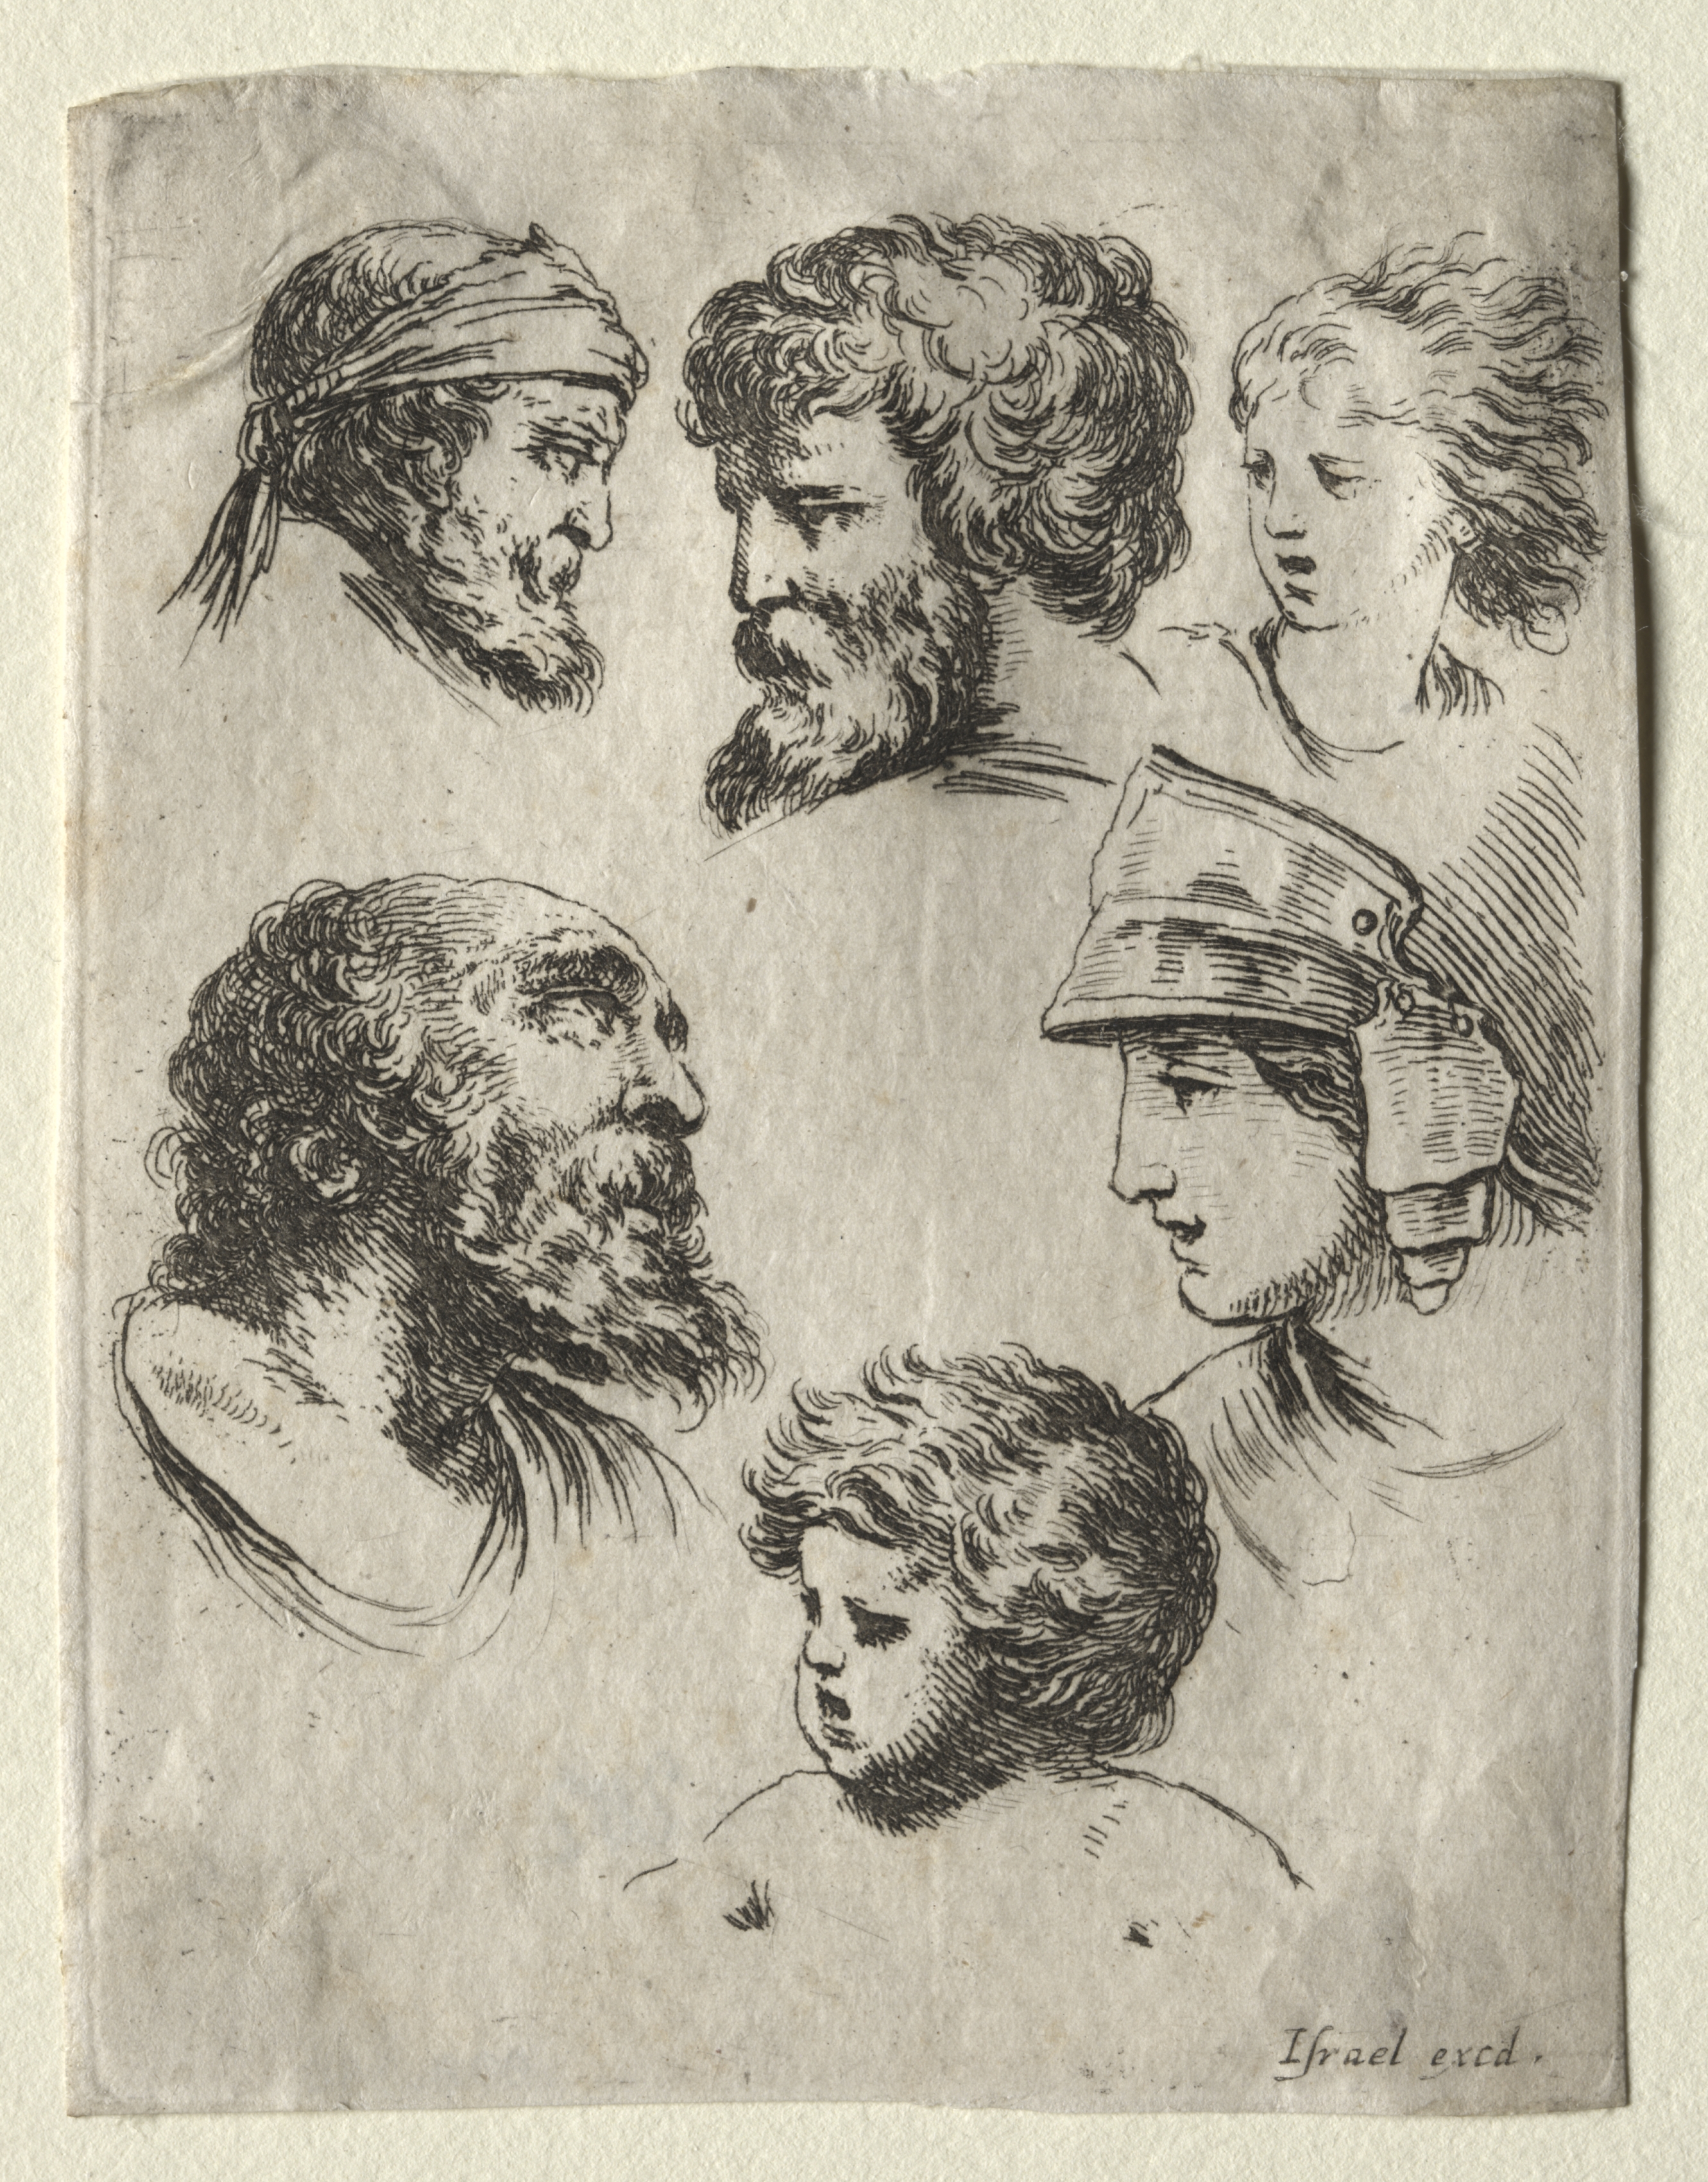 Book for Learning to Draw (Livre pour apprendre à dessiner): Six Portrait Heads